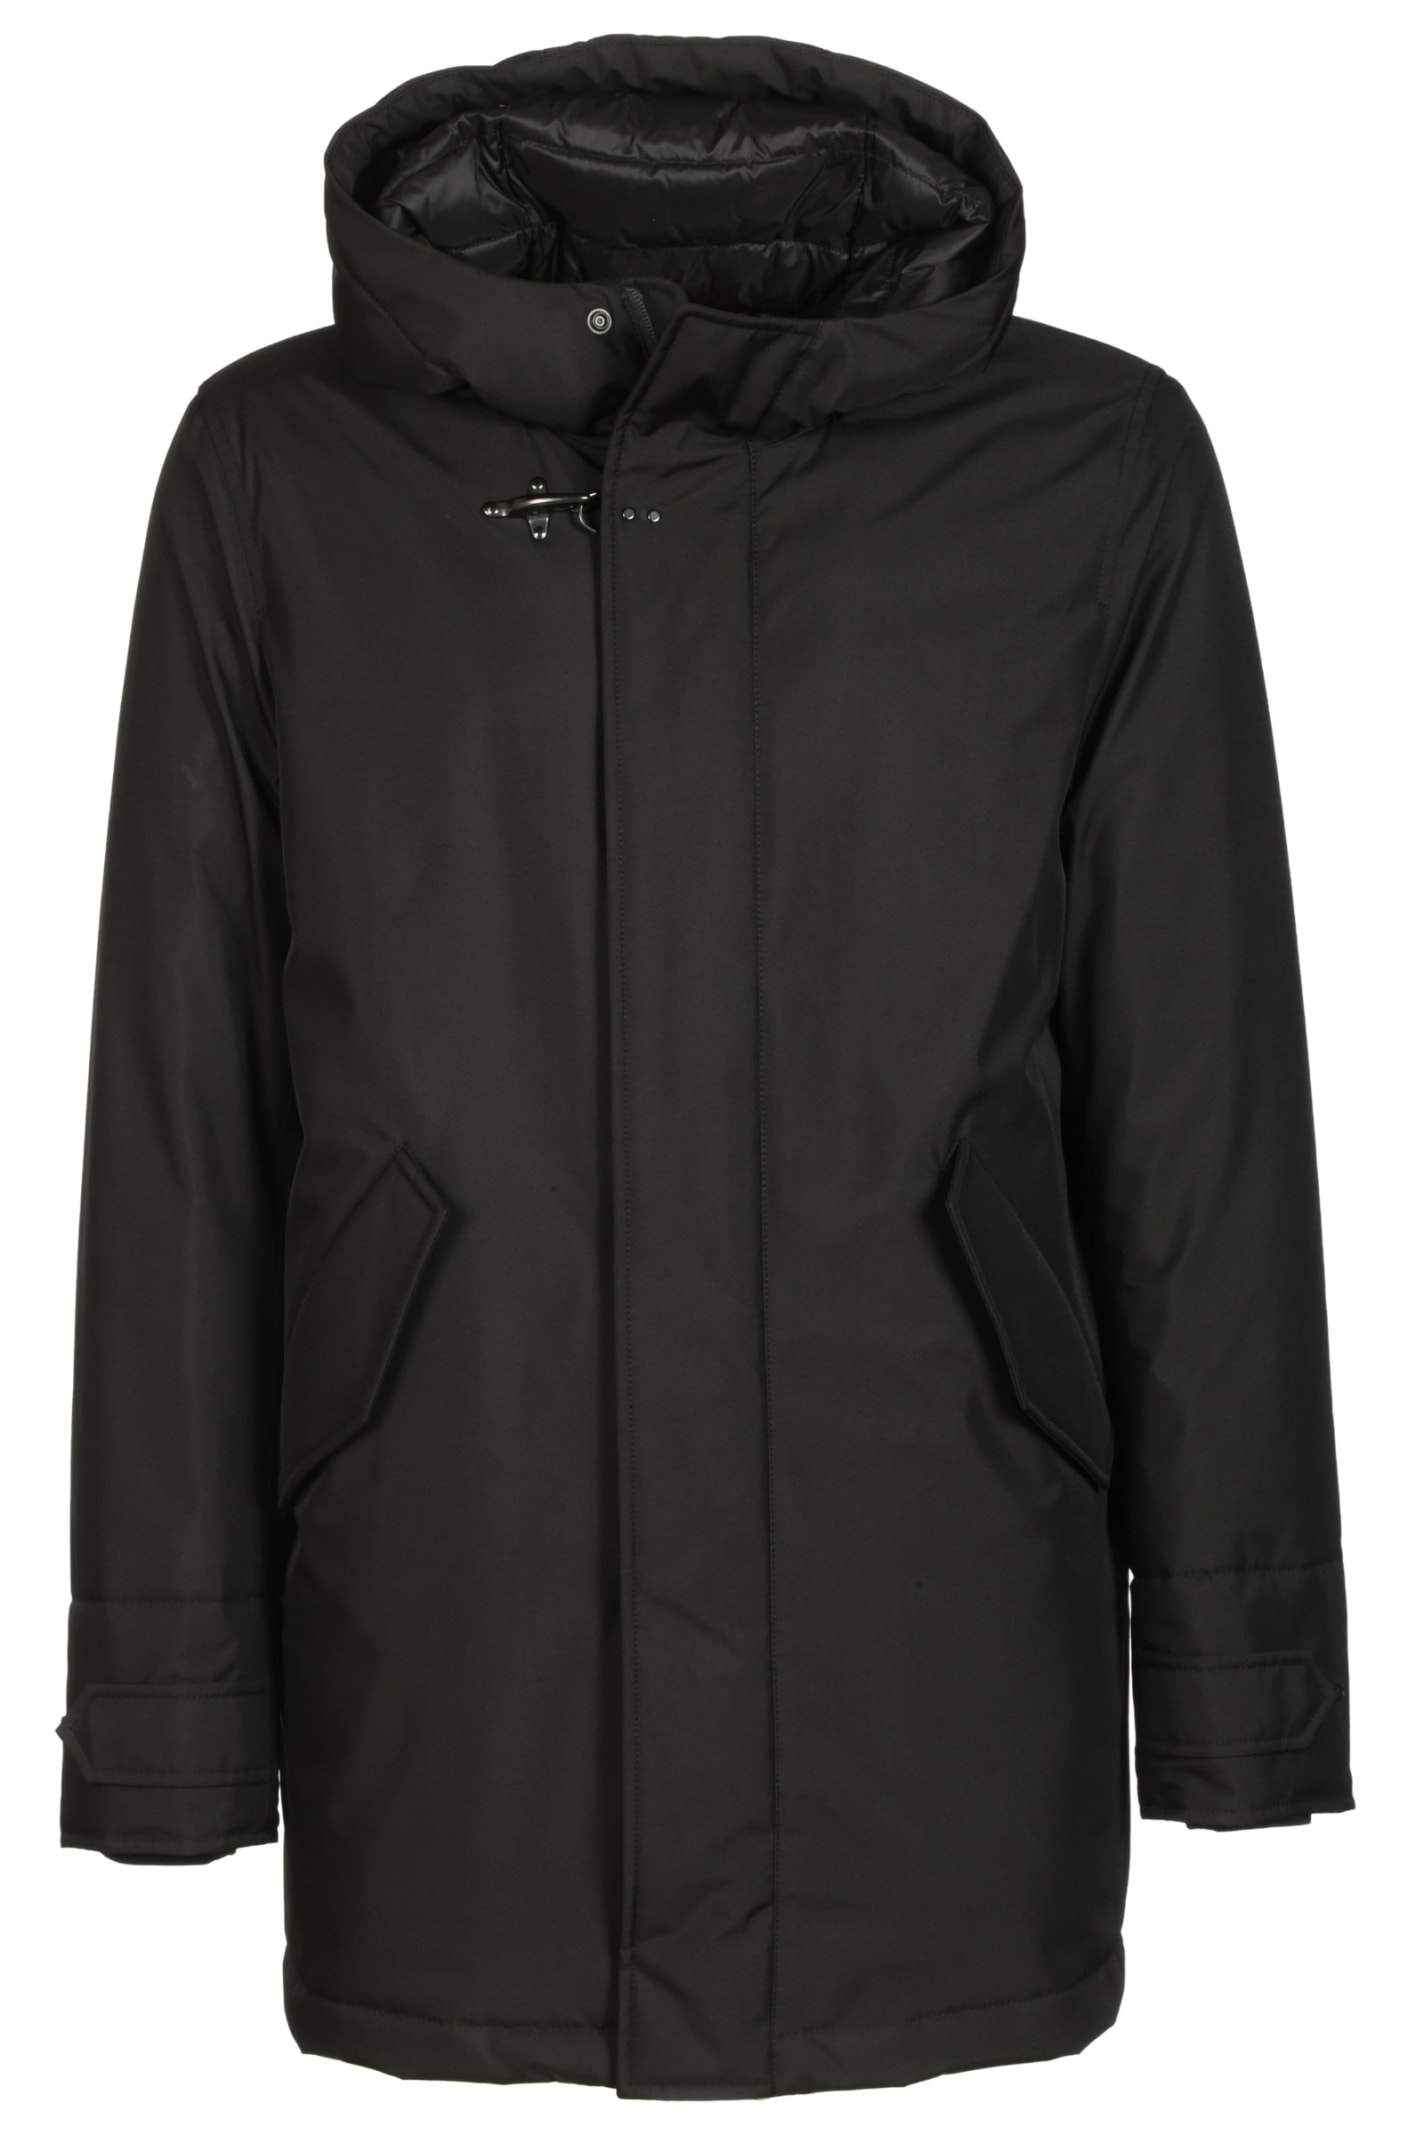 Fay Regular Plain Hooded Raincoat